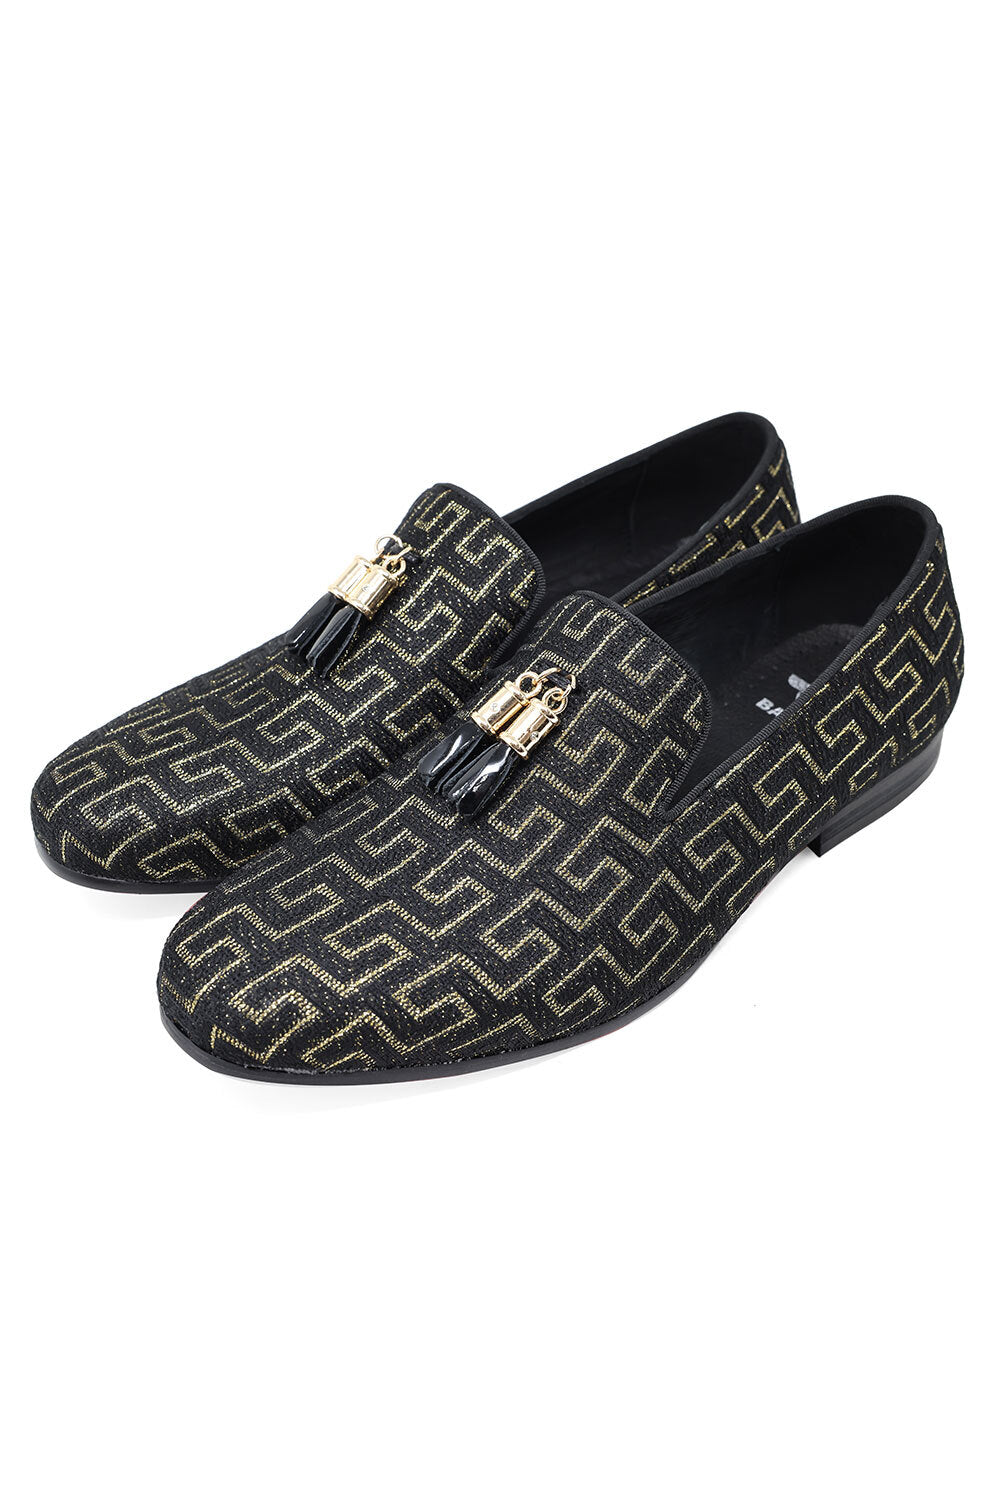 BARABAS Men's Rhinestone Greek key Pattern Tassel Loafer Shoes SH3087 Black Gold